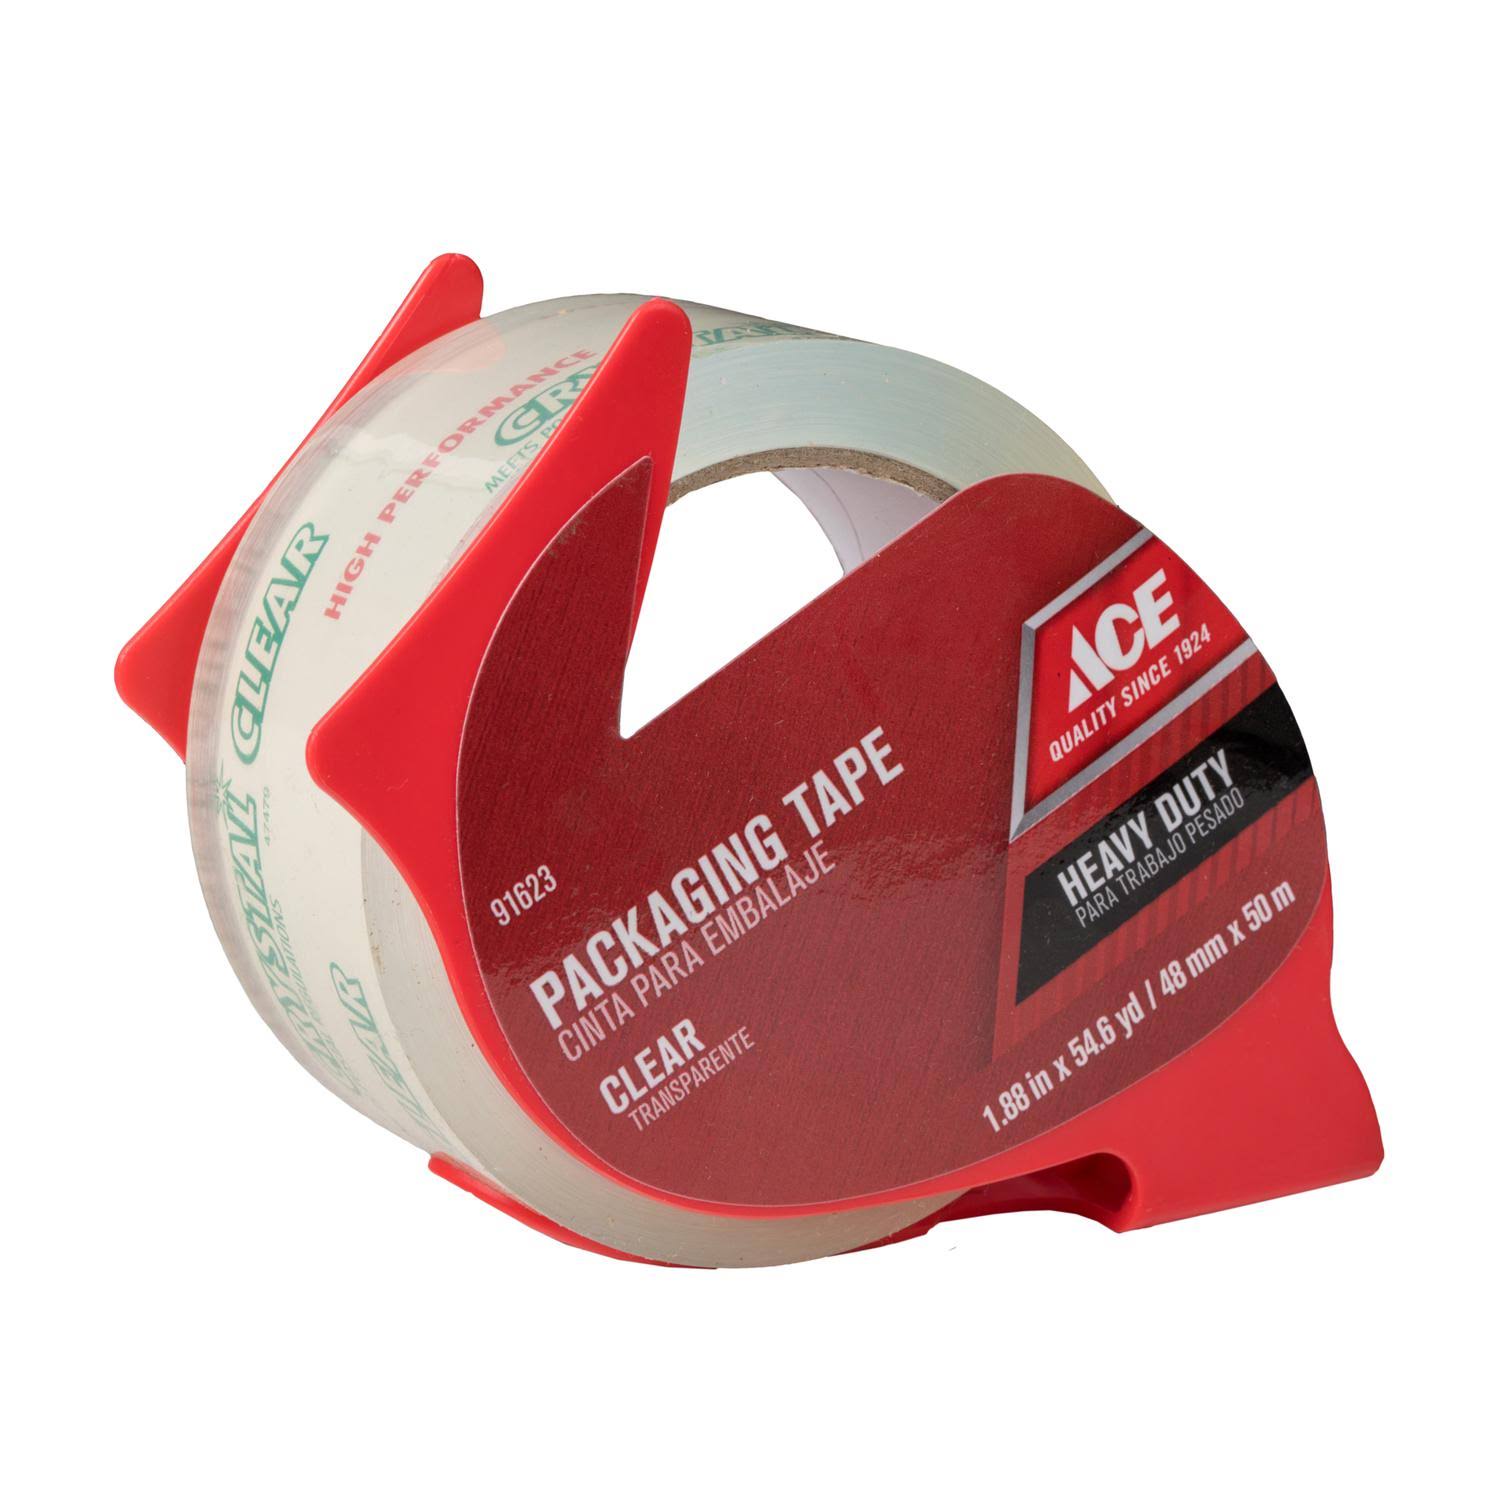 Ace Clear Carton Sealing Tape - 1.88" x 54.6 Yards